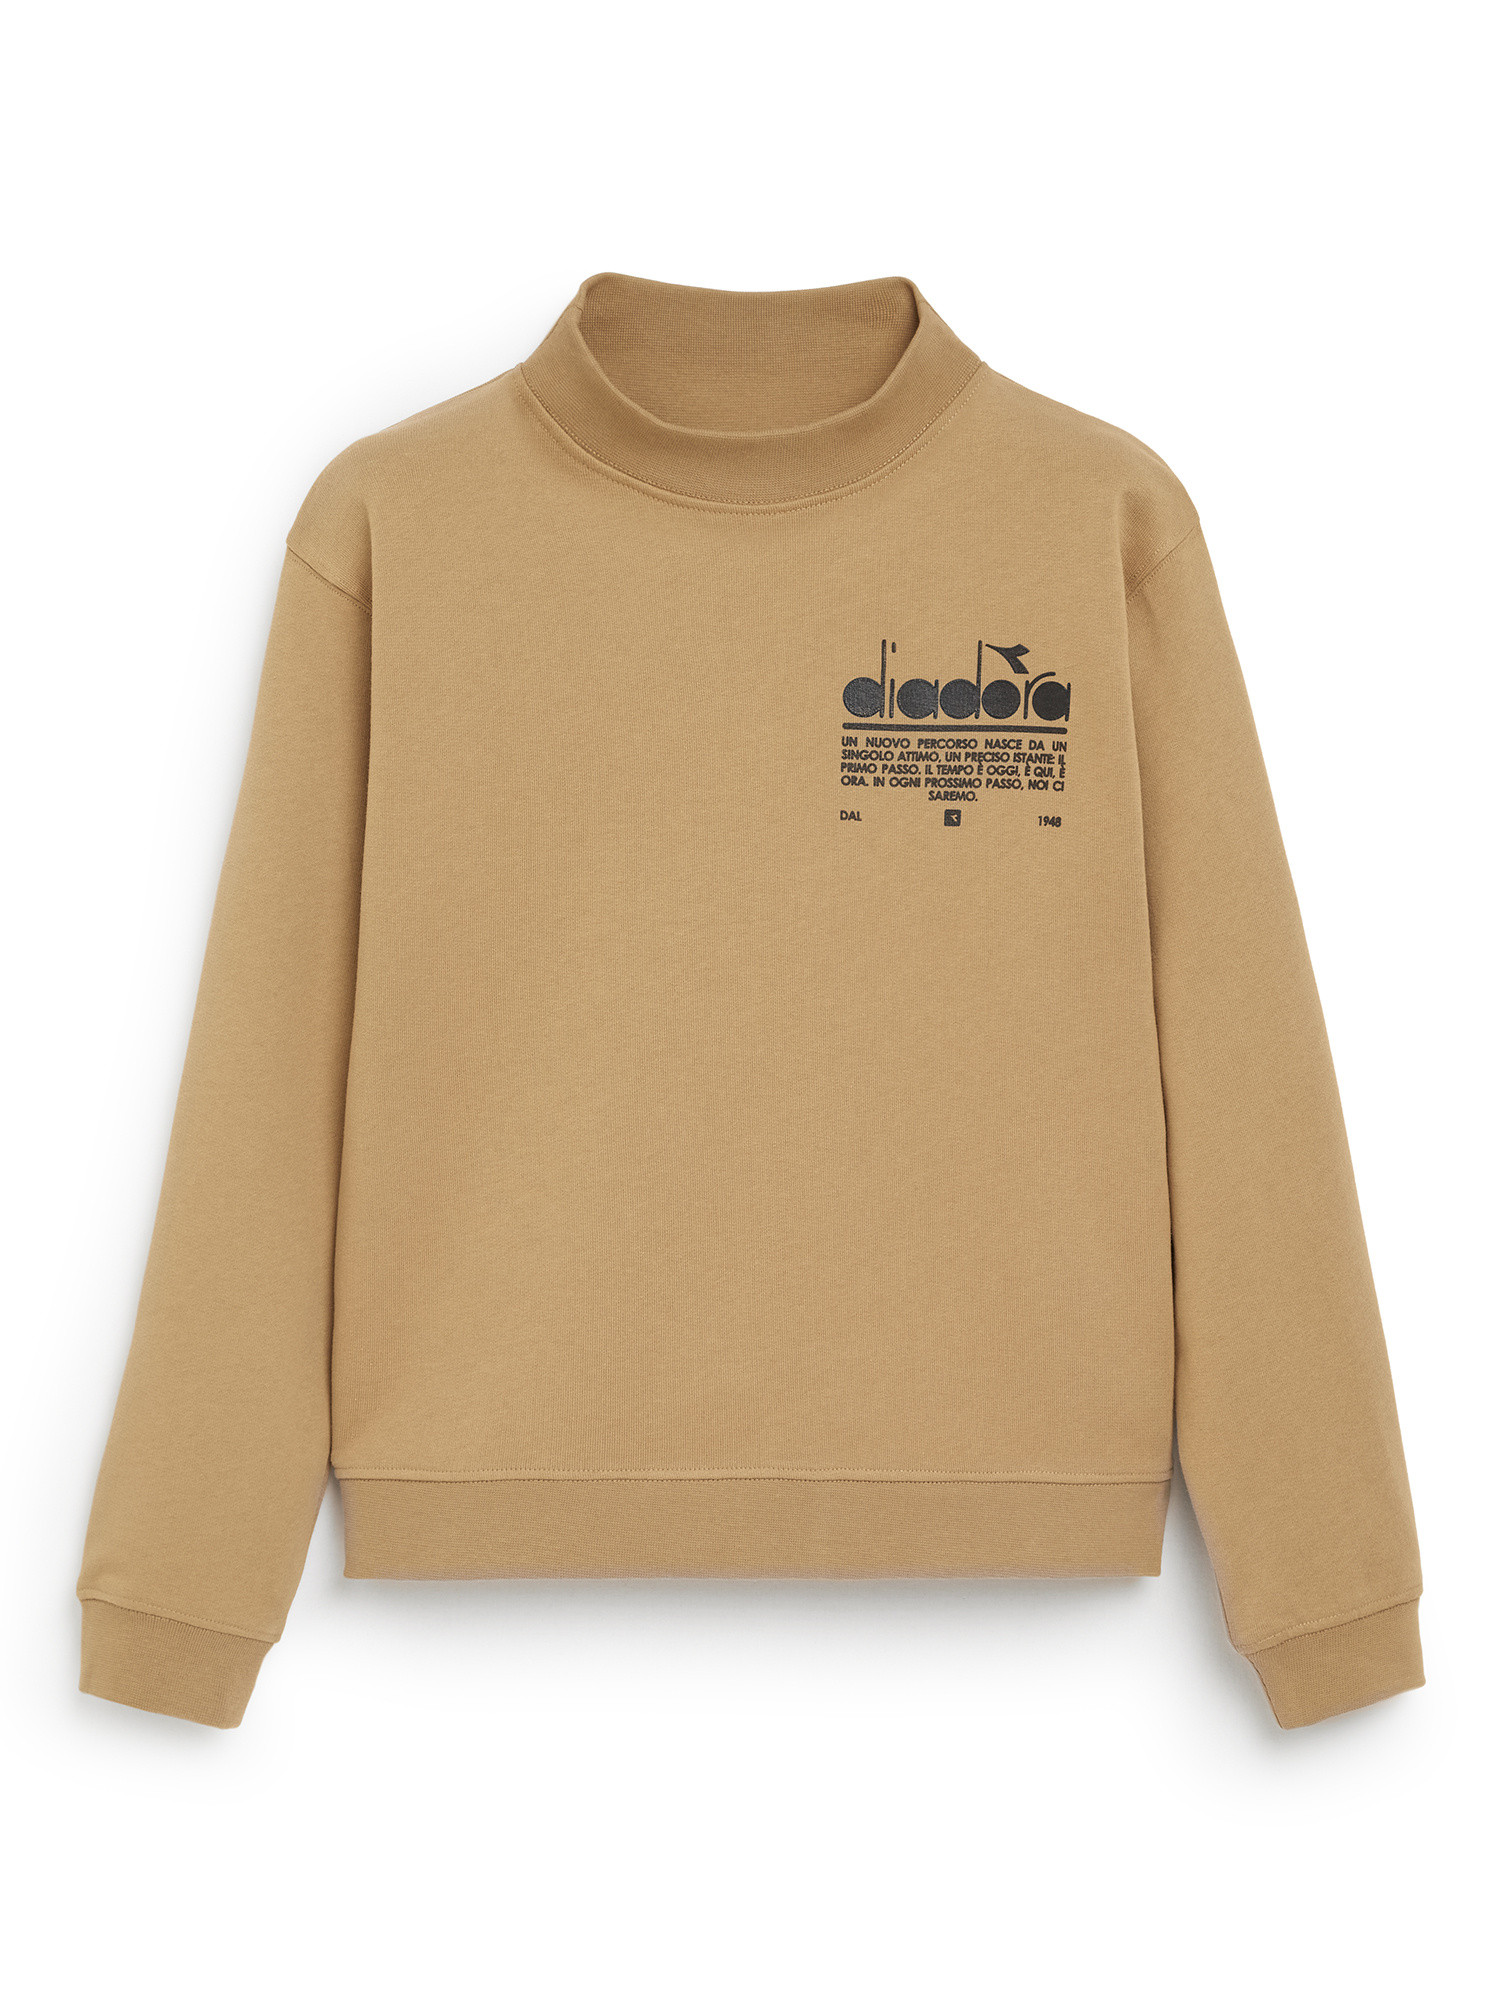 Diadora - Manifesto cotton sweatshirt, Beige, large image number 0